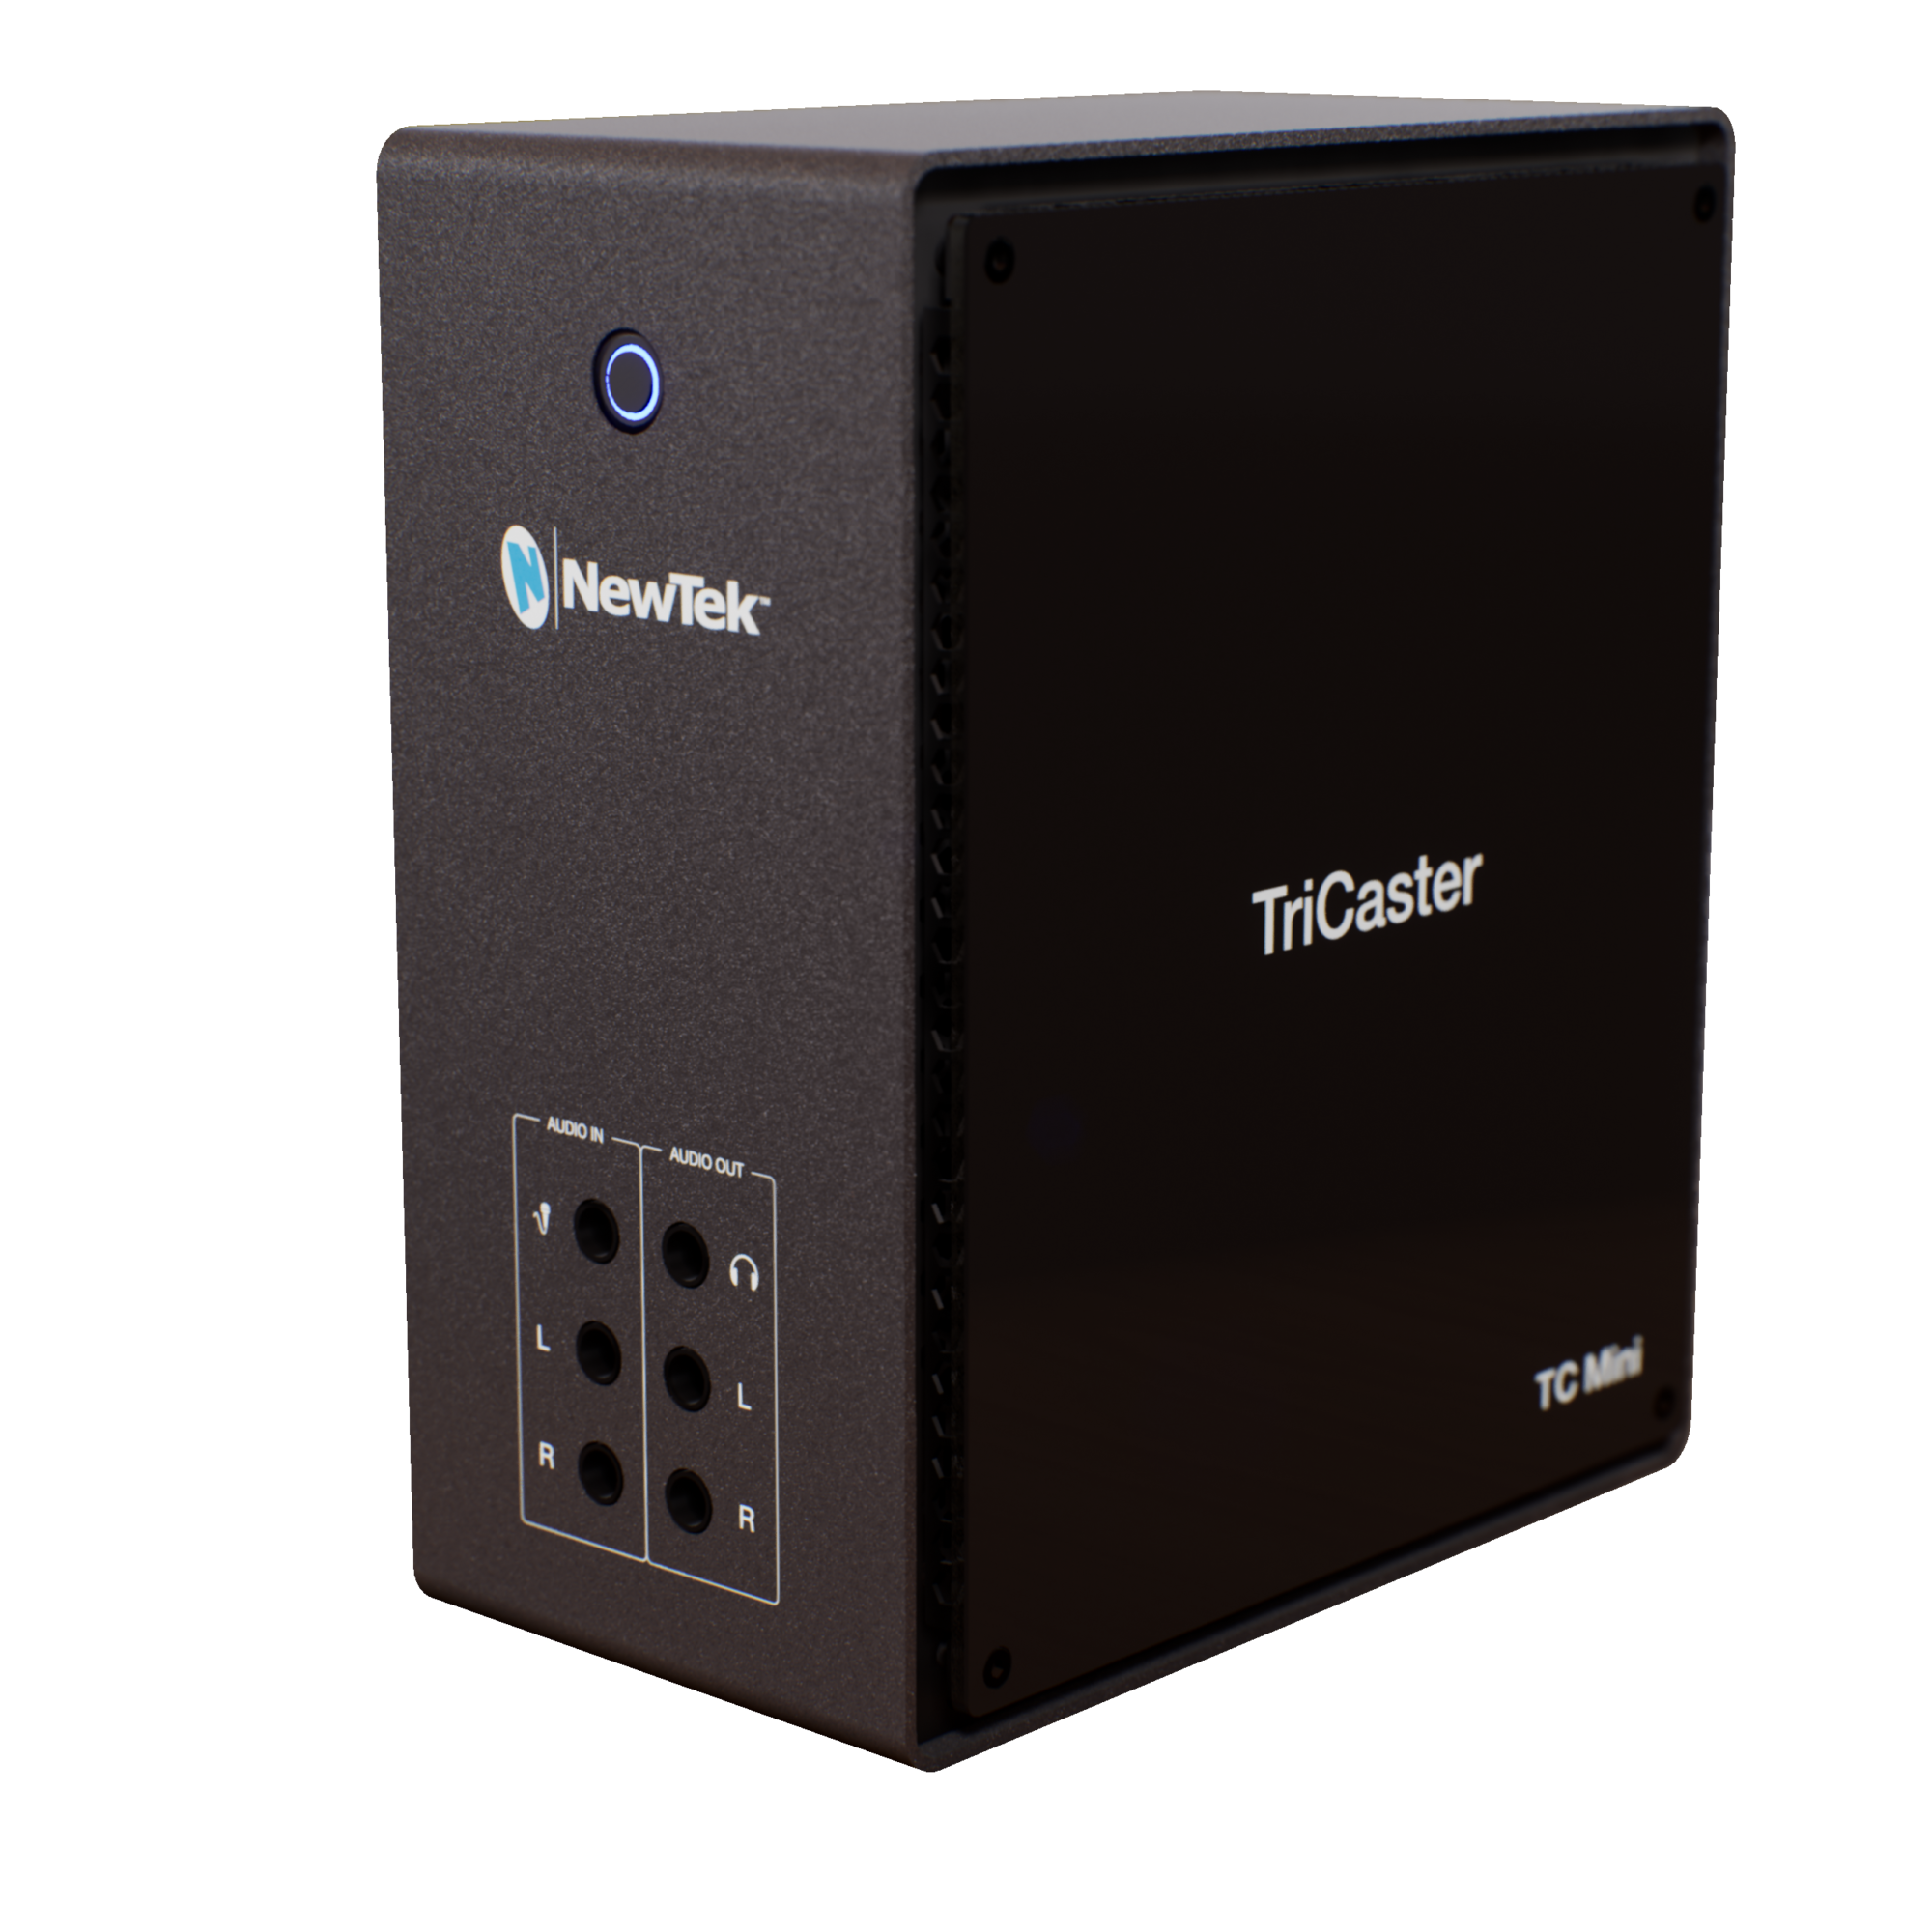 TriCaster Mini 4K|NDI NewTek CS Bundle